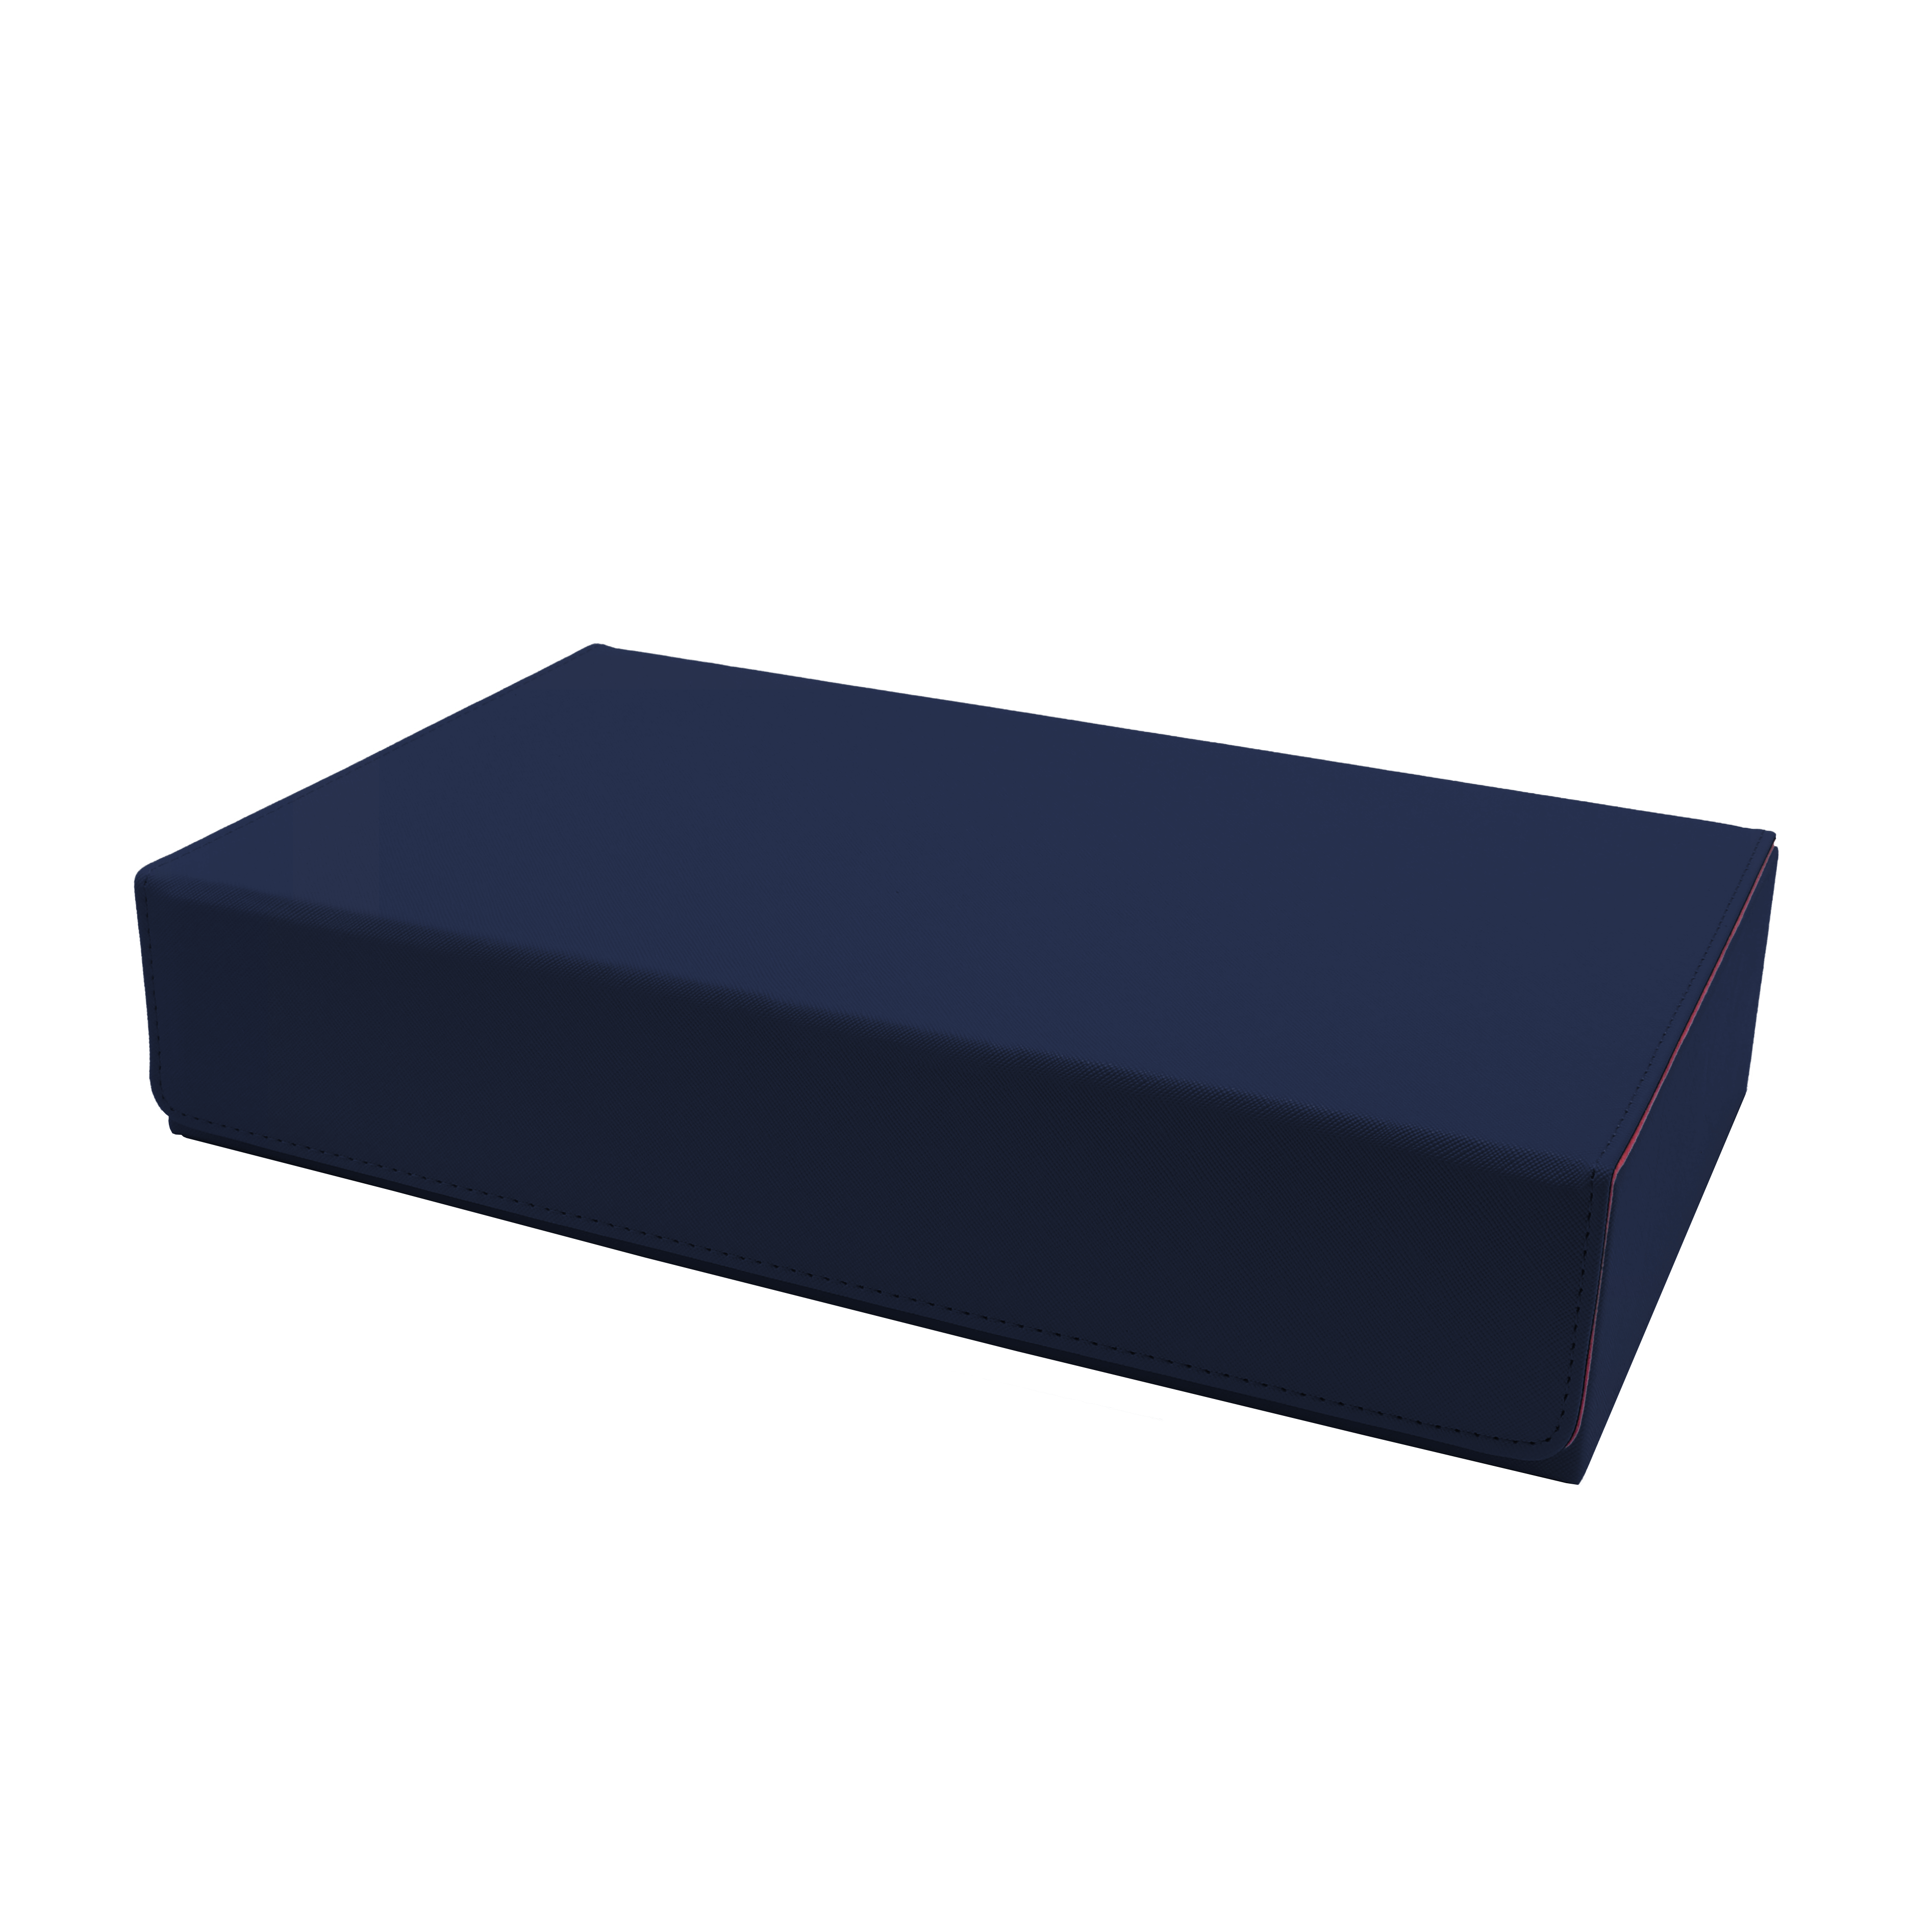 Black DEXGC001 DEX Protection Game Chest Storage Box 